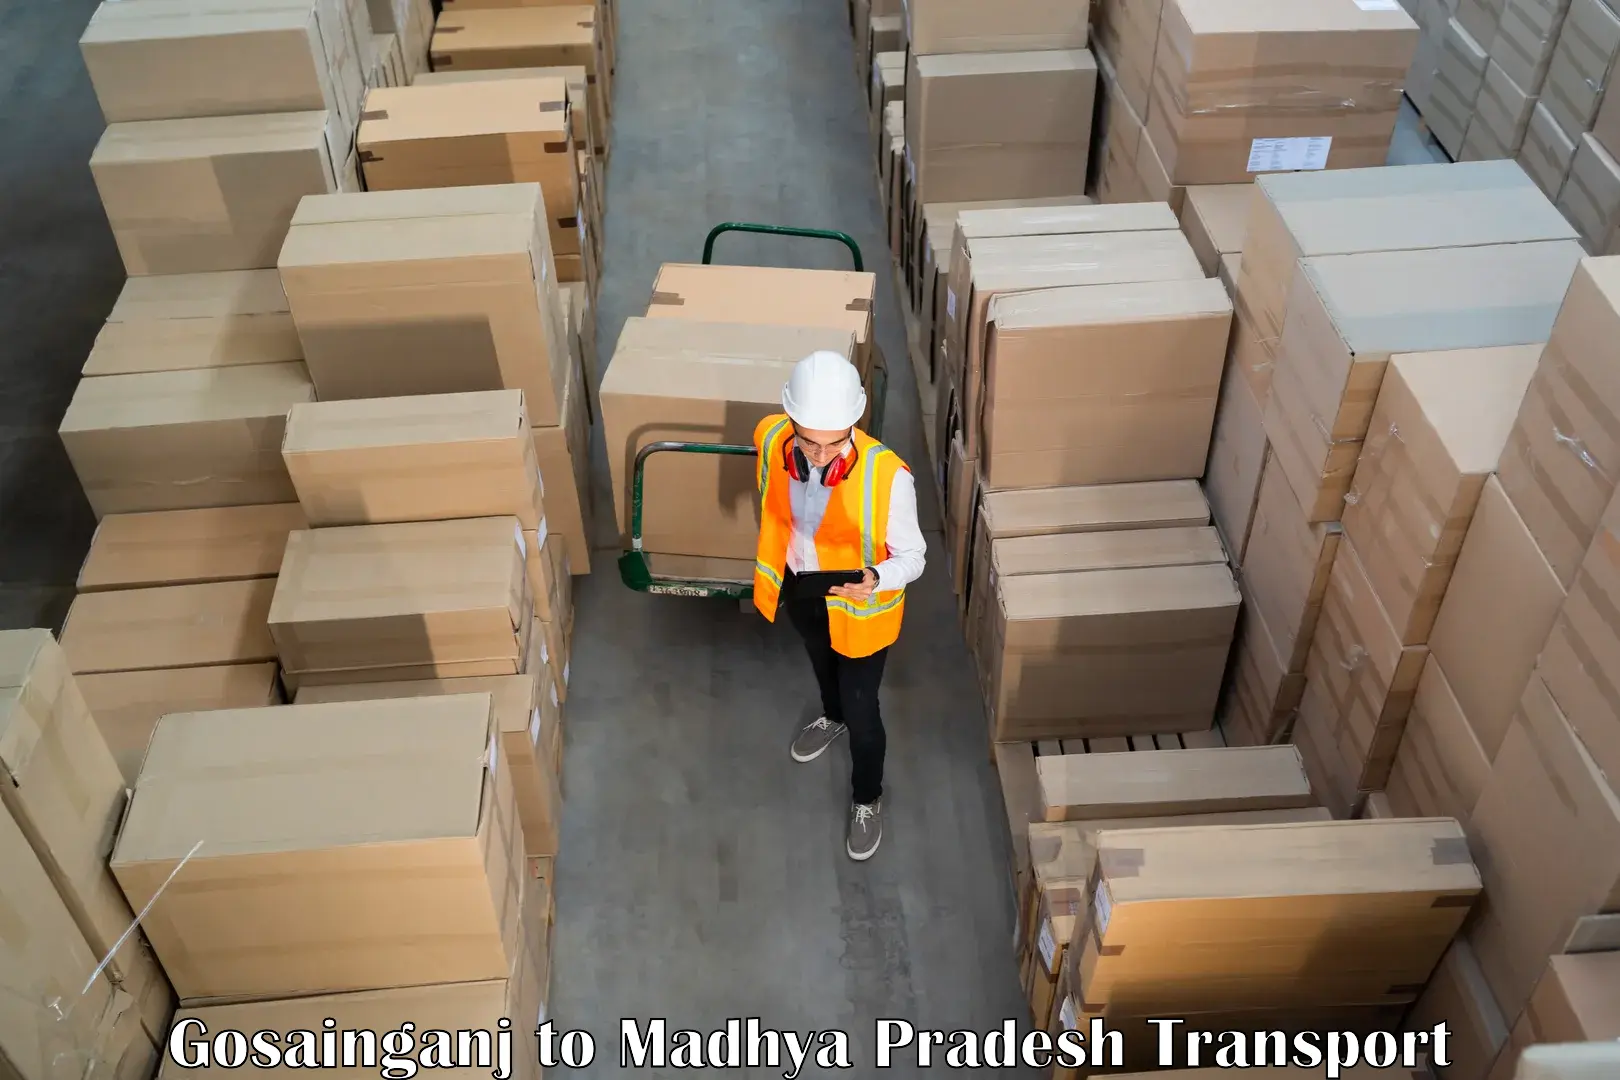 Truck transport companies in India in Gosainganj to Sehore